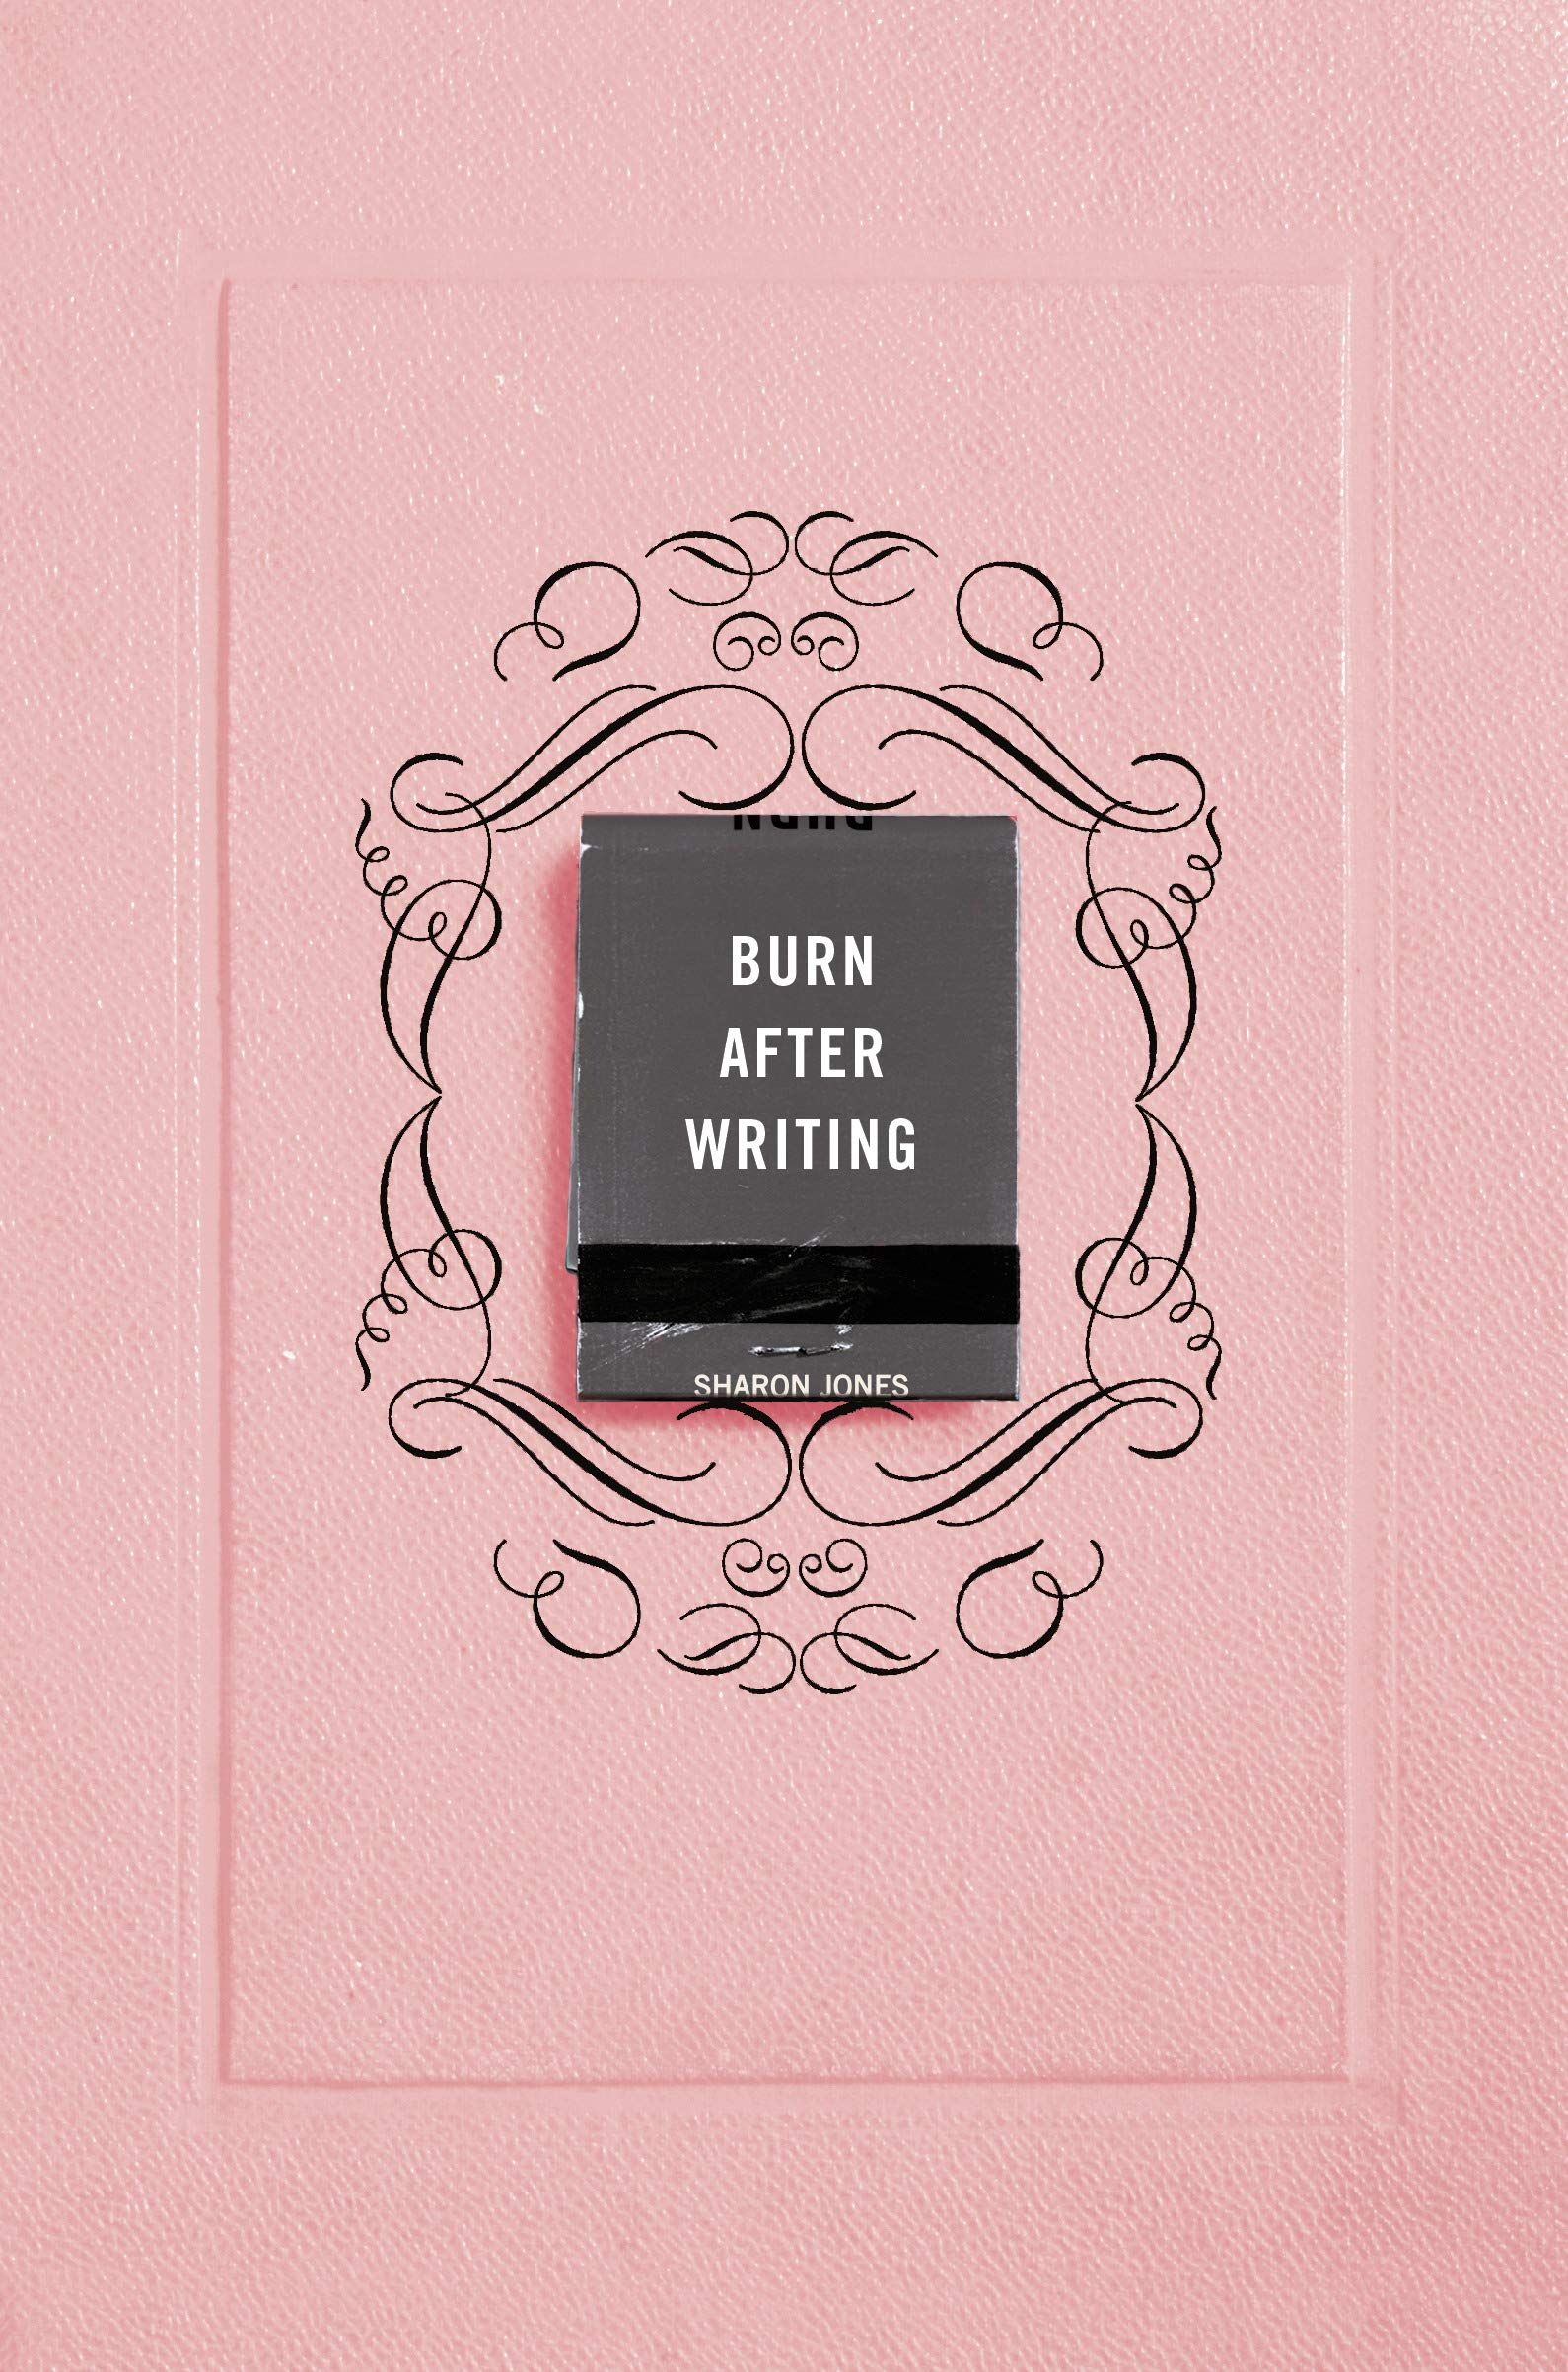 burn after writing pdf free